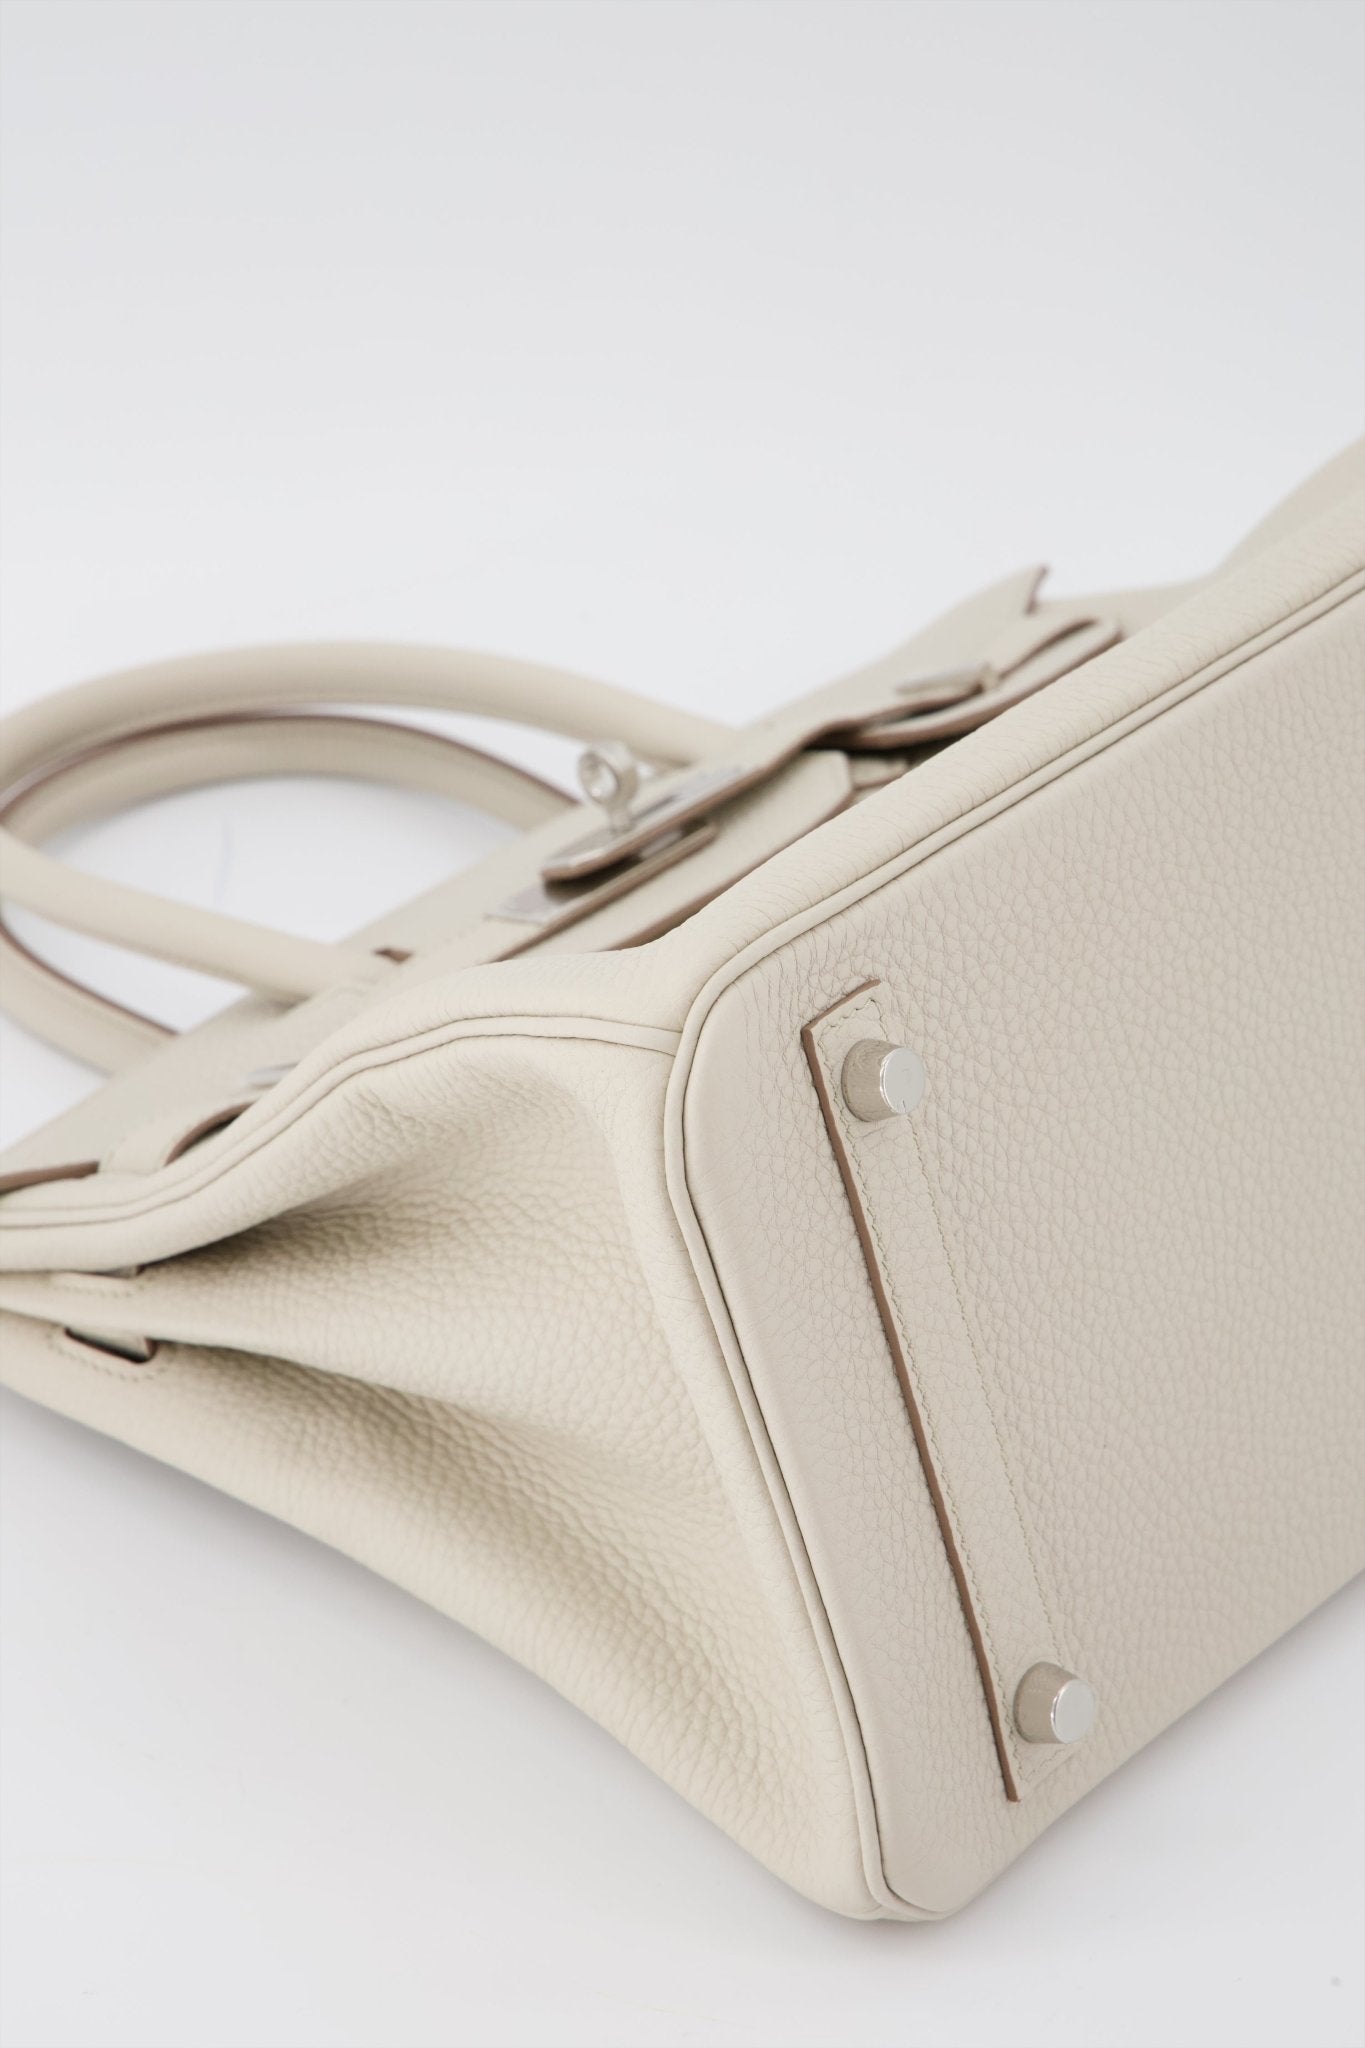 Hermes Birkin 30 Handbag Beton Togo Leather With Palladium